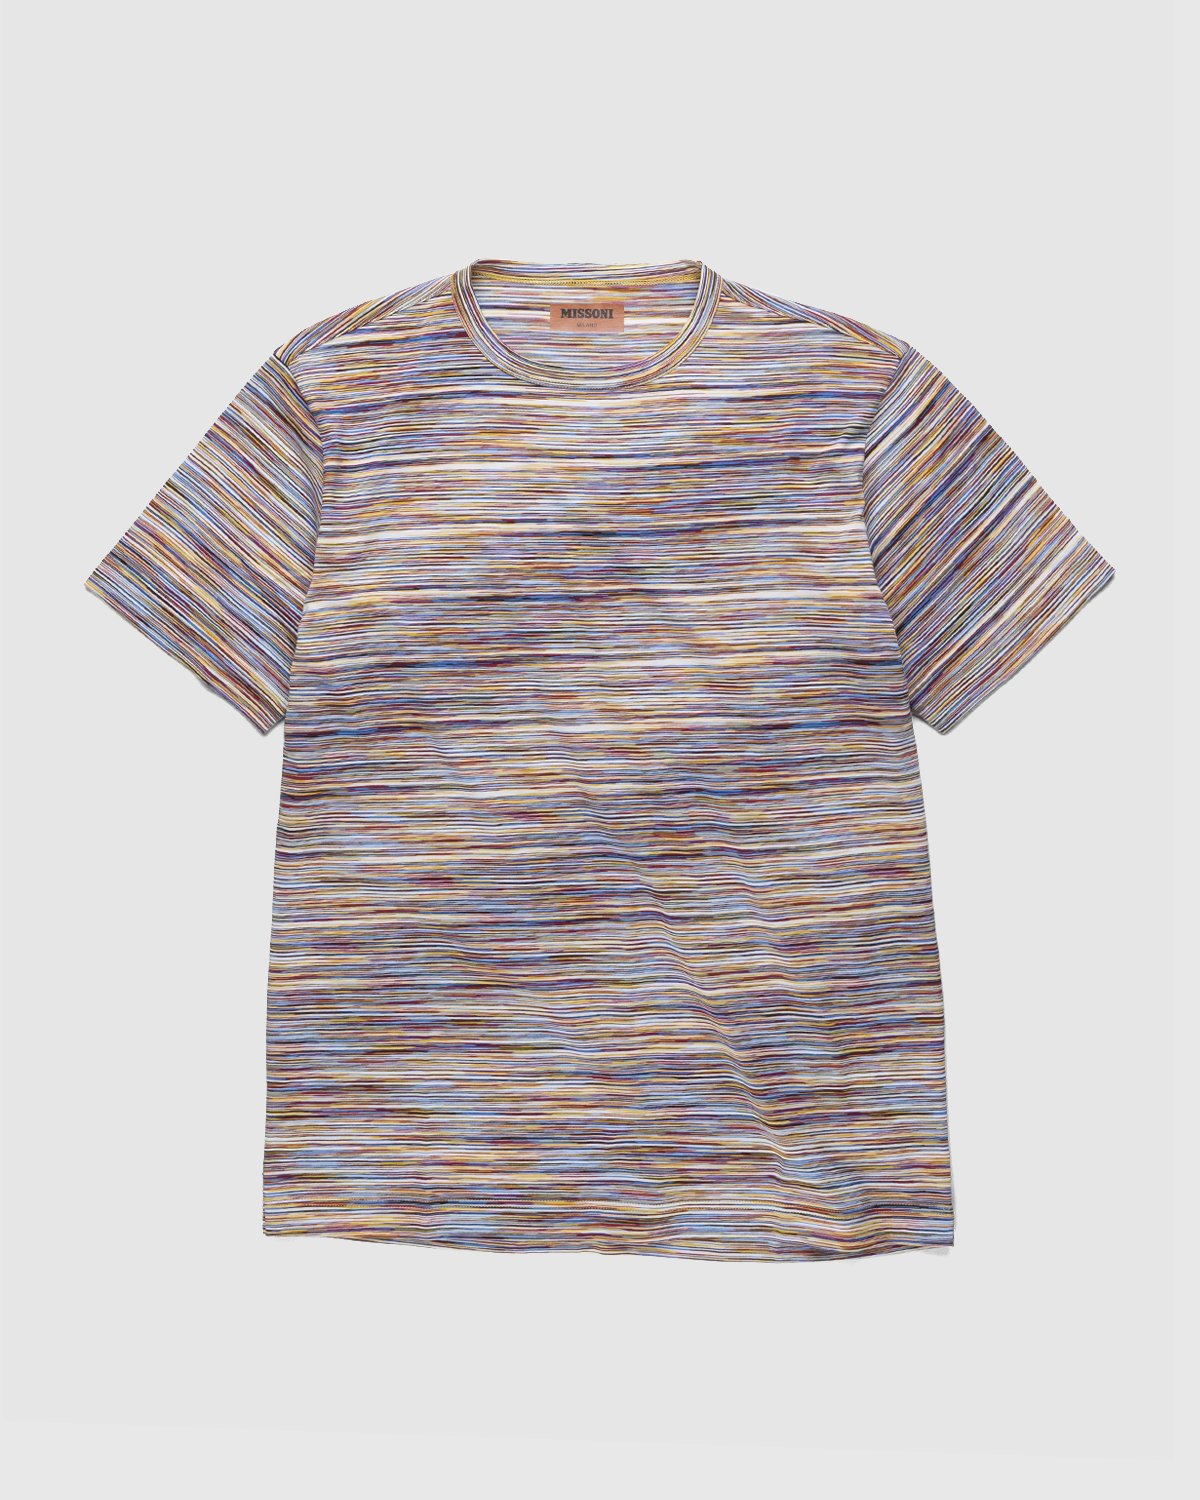 Missoni - Pattern Short-Sleeve T-Shirt Flammato - Clothing - Multi - Image 1